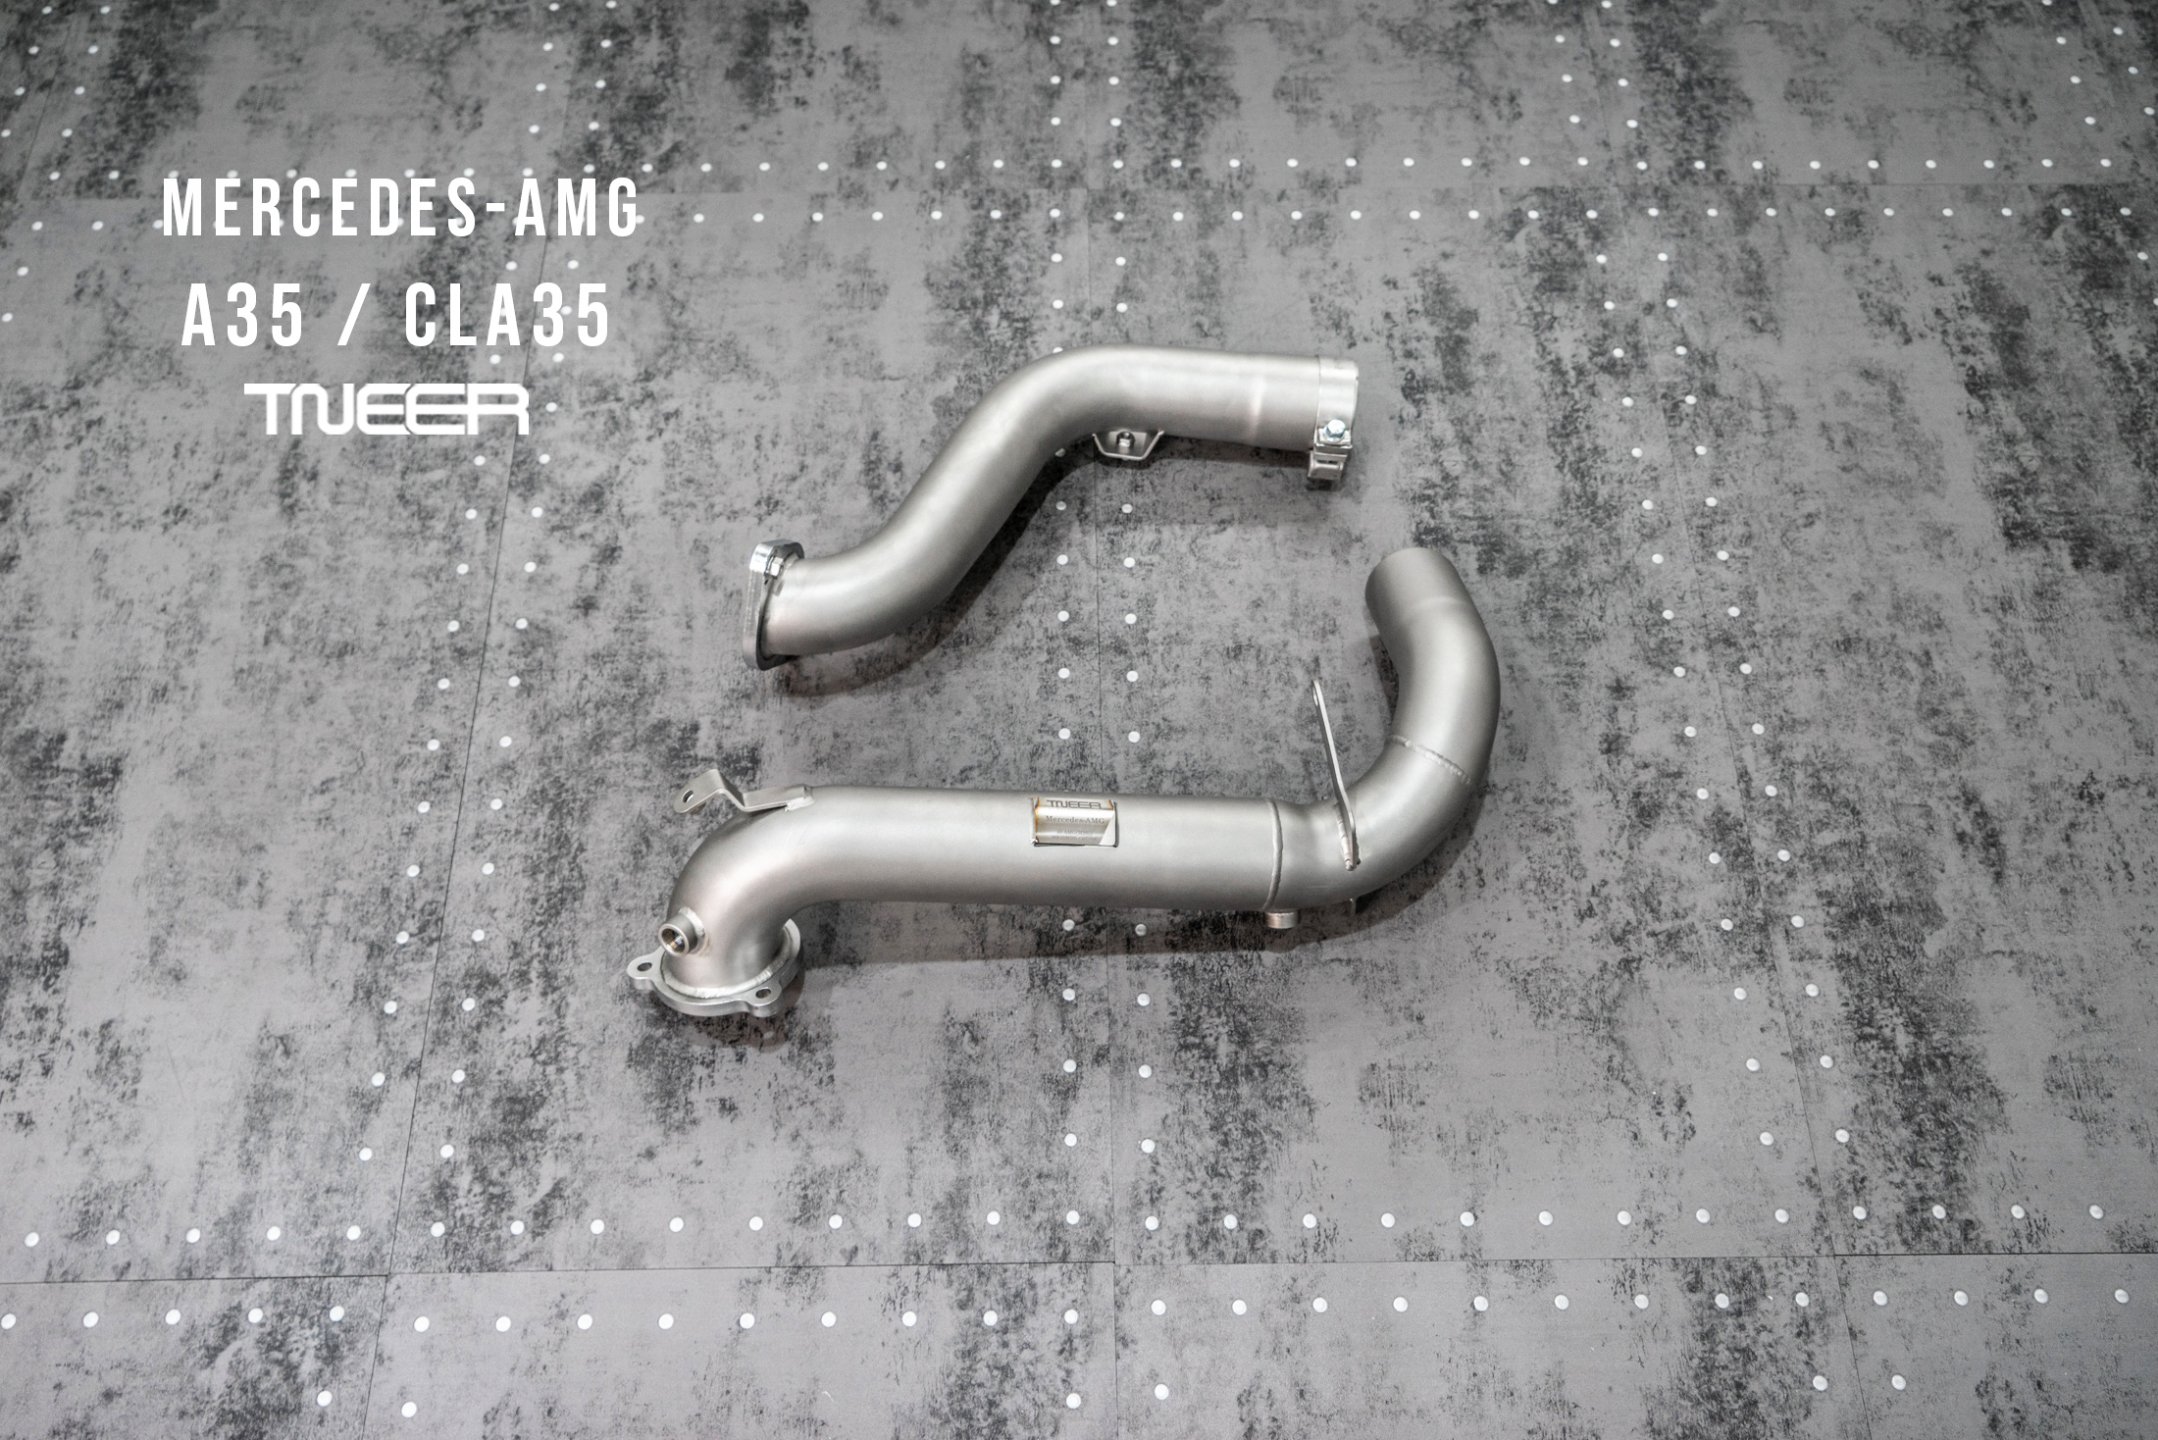 Mercedes-AMG C118 CLA35 TNEER High-Performance Downpipes